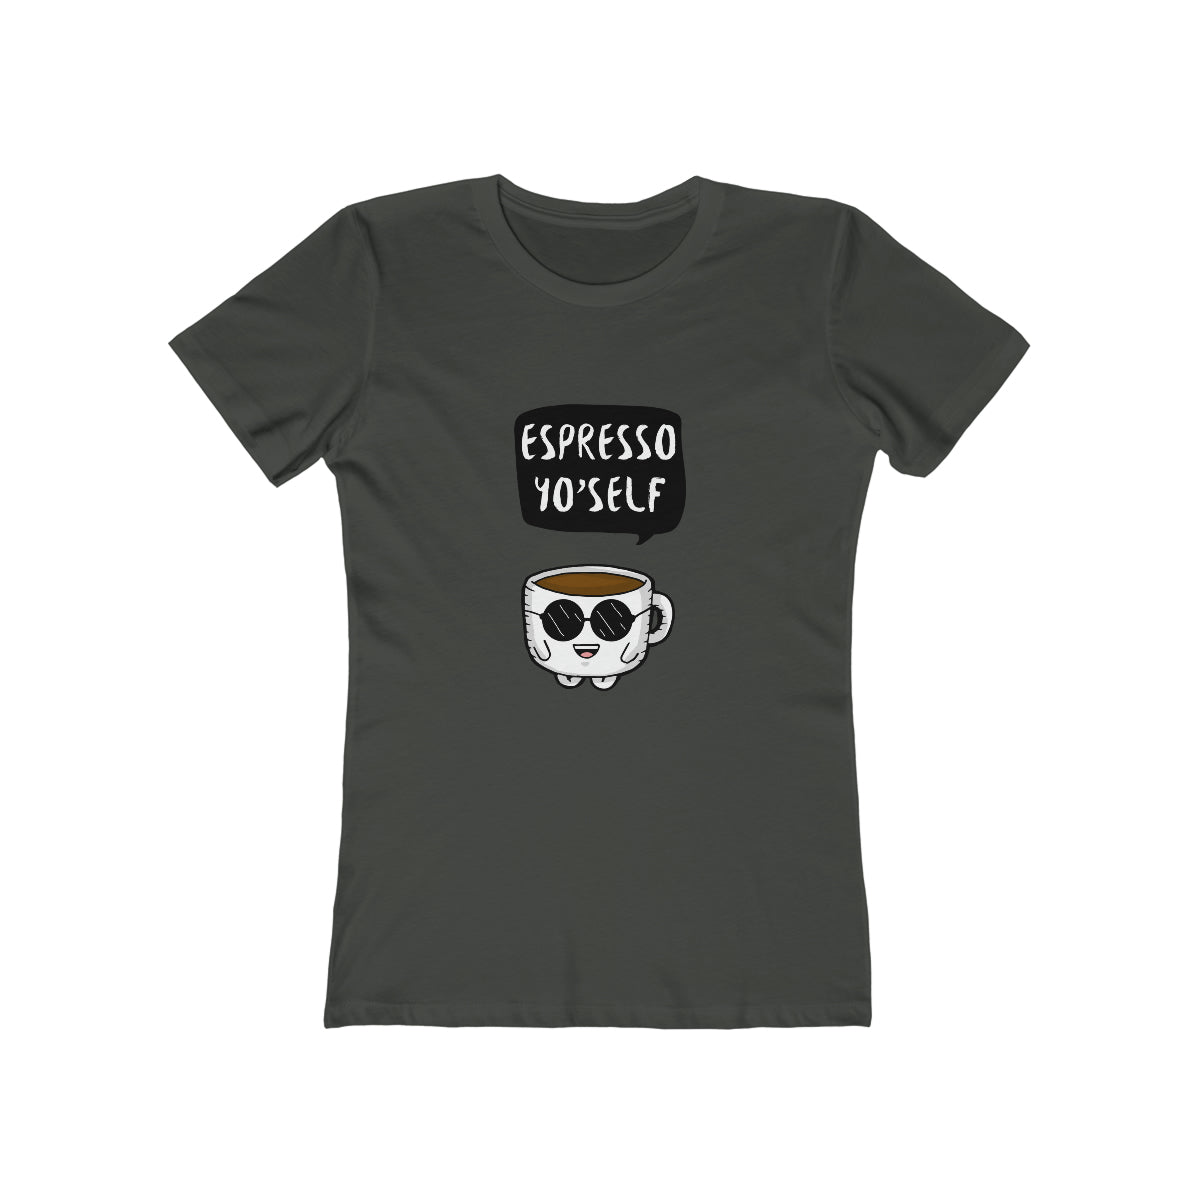 Espresso Yo'self - Women's T-shirt